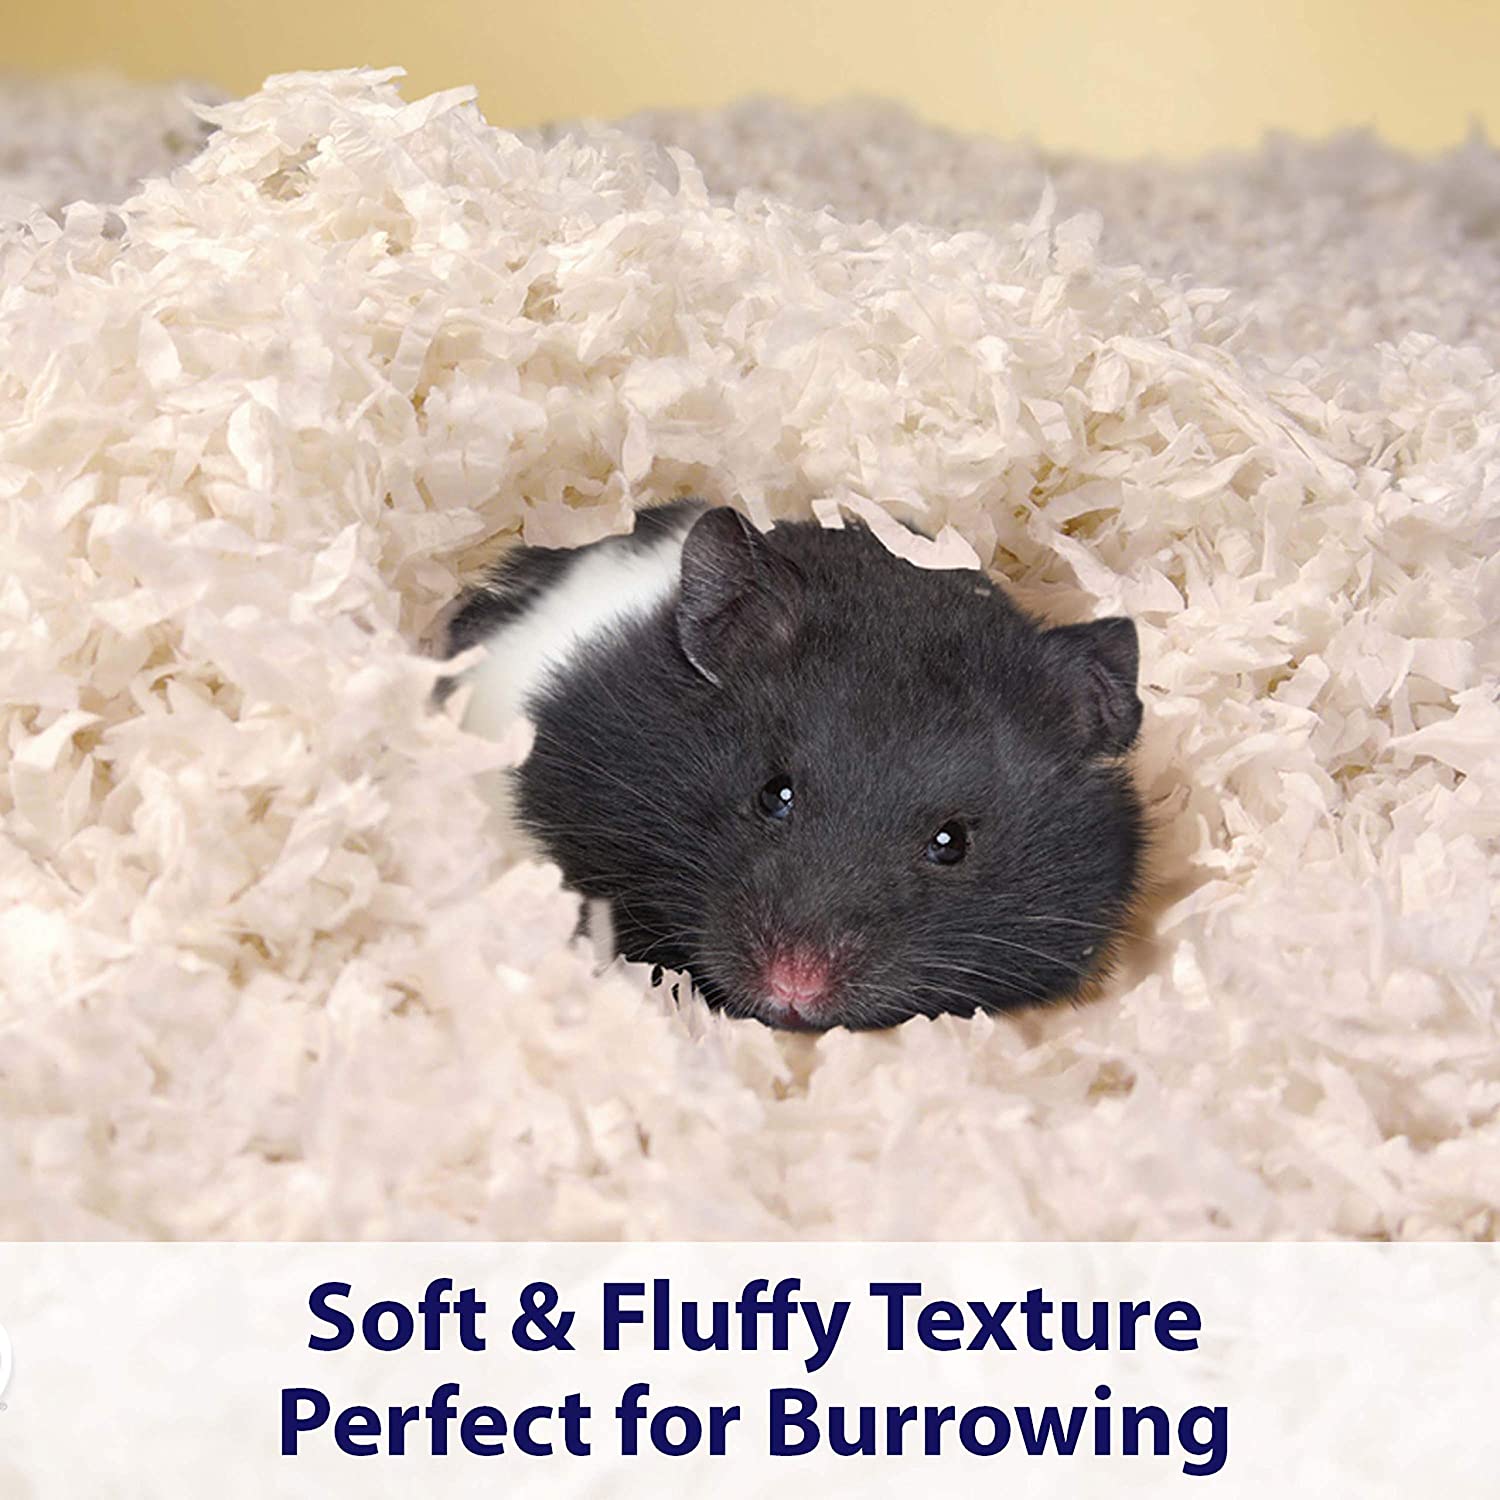 Kaytee Clean & Cozy White Small Animal Bedding